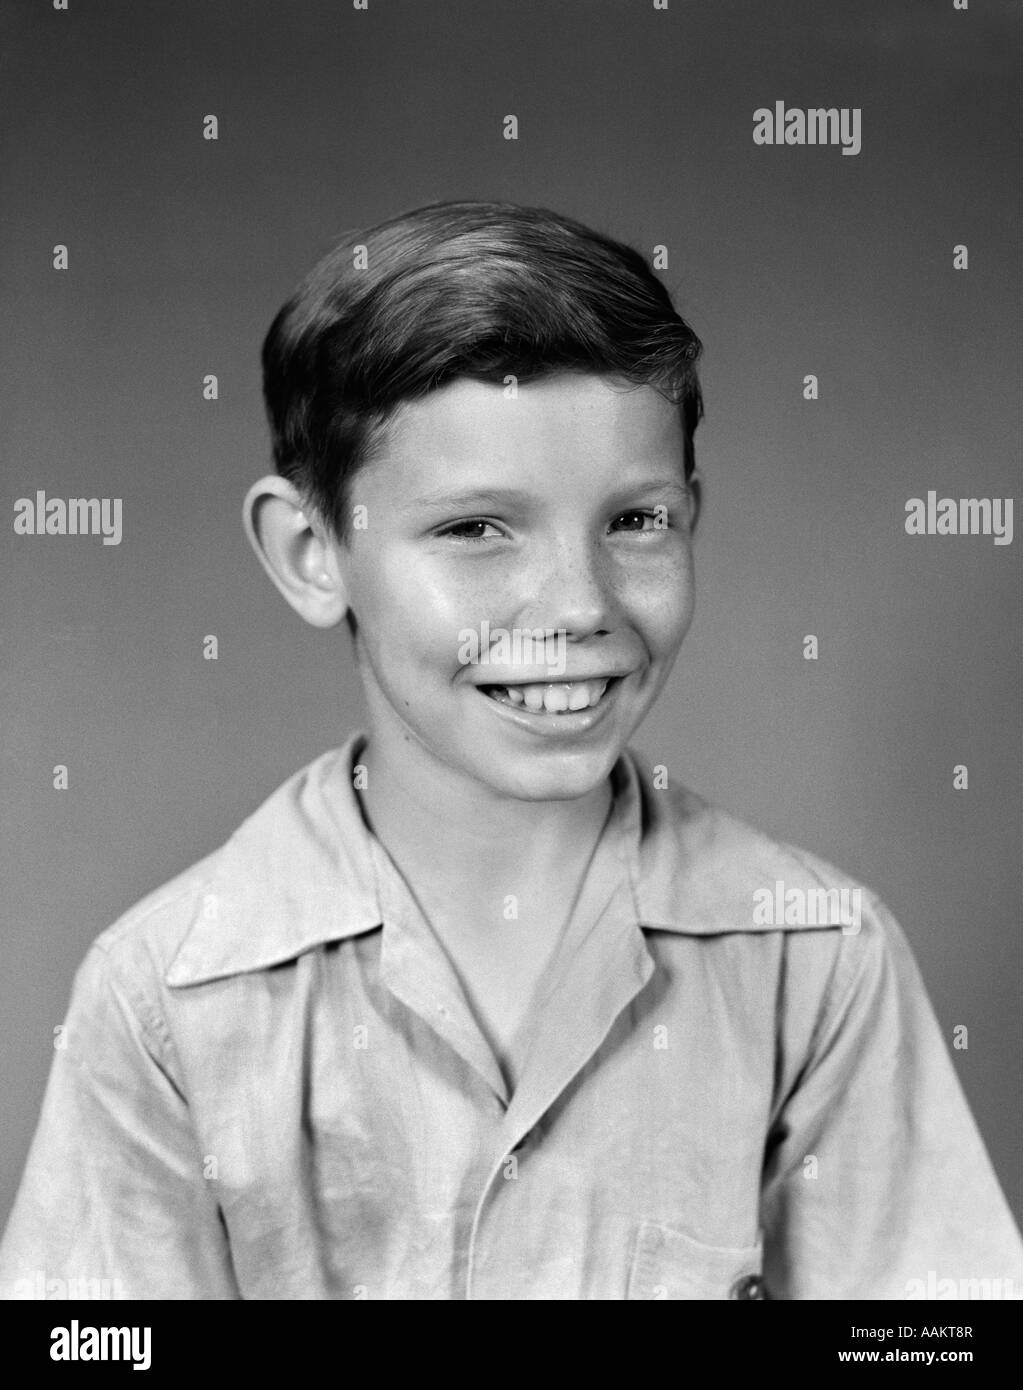 1940s 1950s SMILING BOY PORTRAIT SCHOOL PHOTO Stock Photo - Alamy